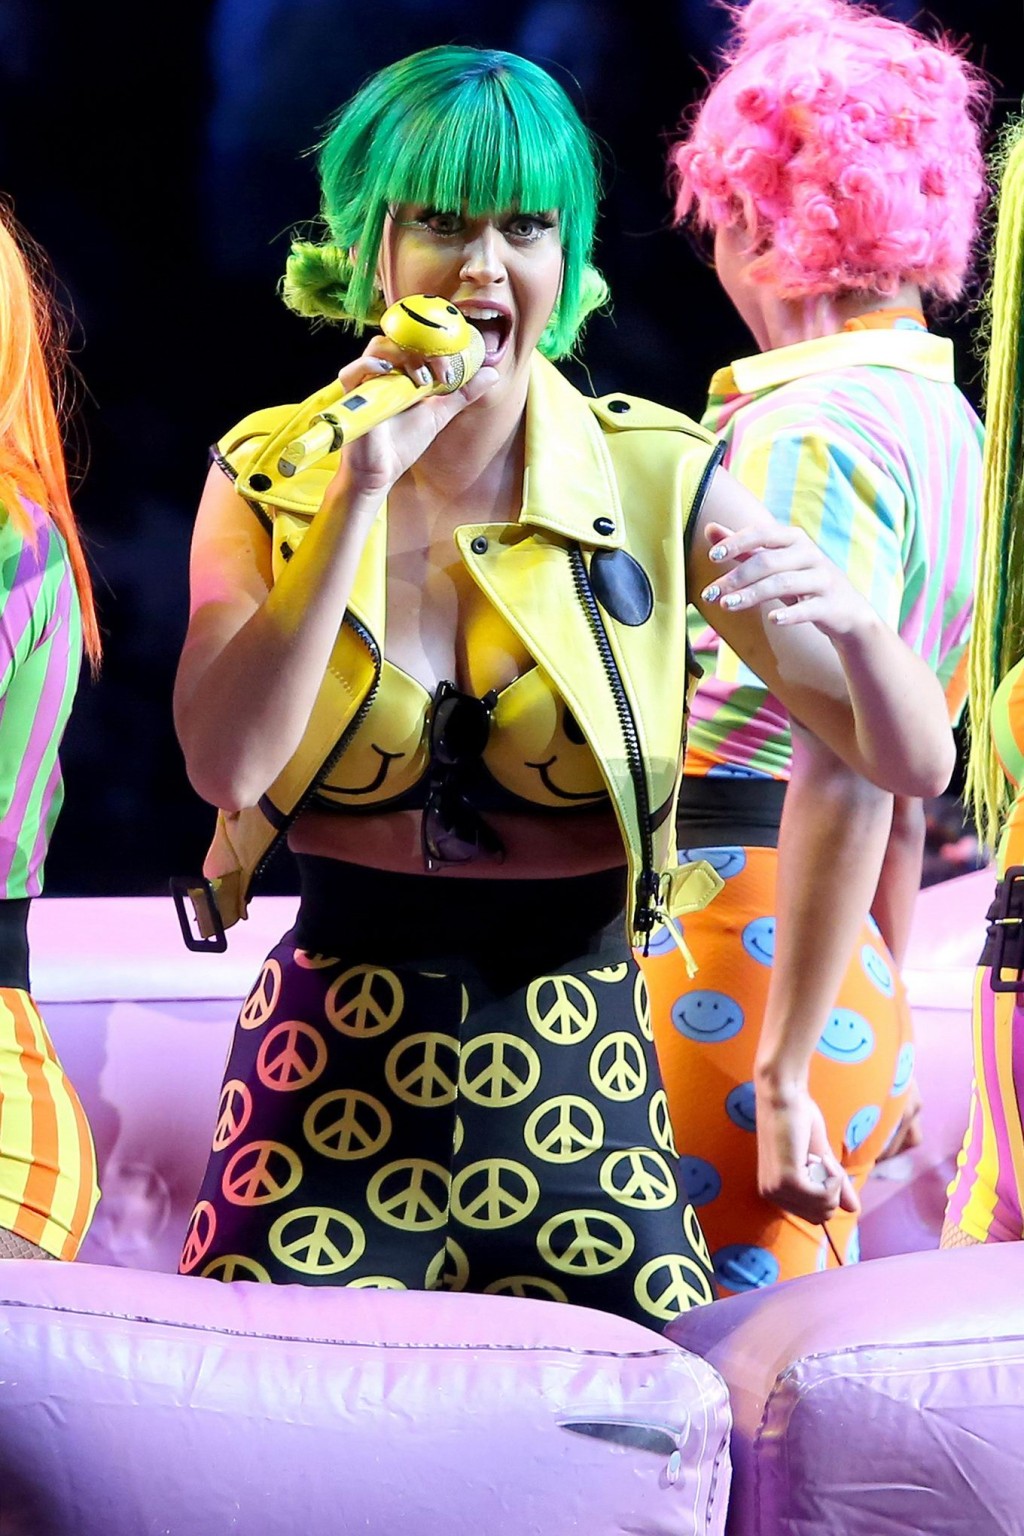 Katy perry guardando come un personaggio hentai busty al suo tour prismatico concerto i
 #75182375